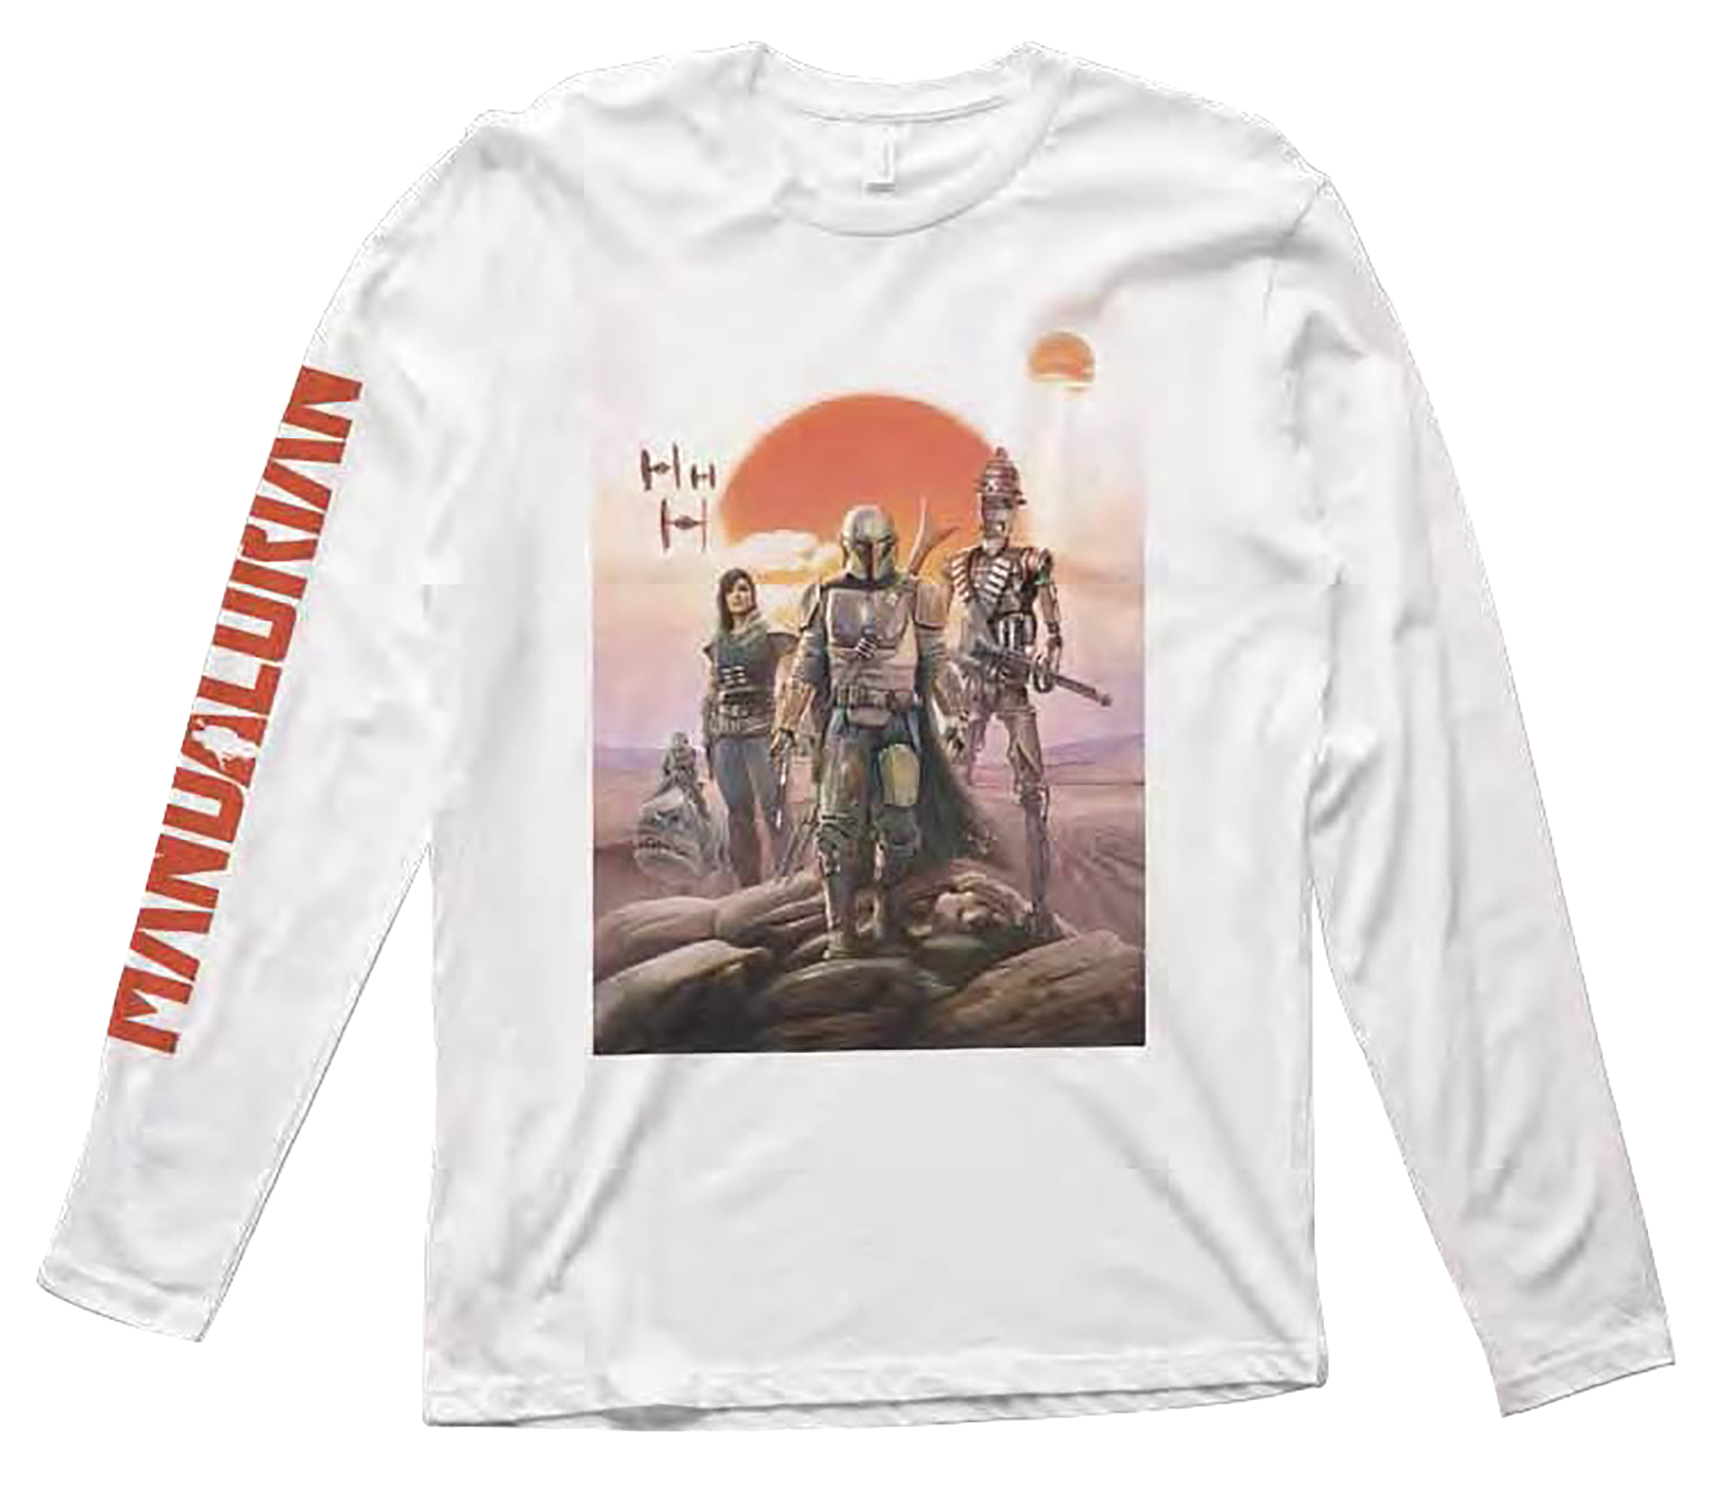 Star Wars The Mandalorian Group Poster Long Sleeve T-Shirt Small